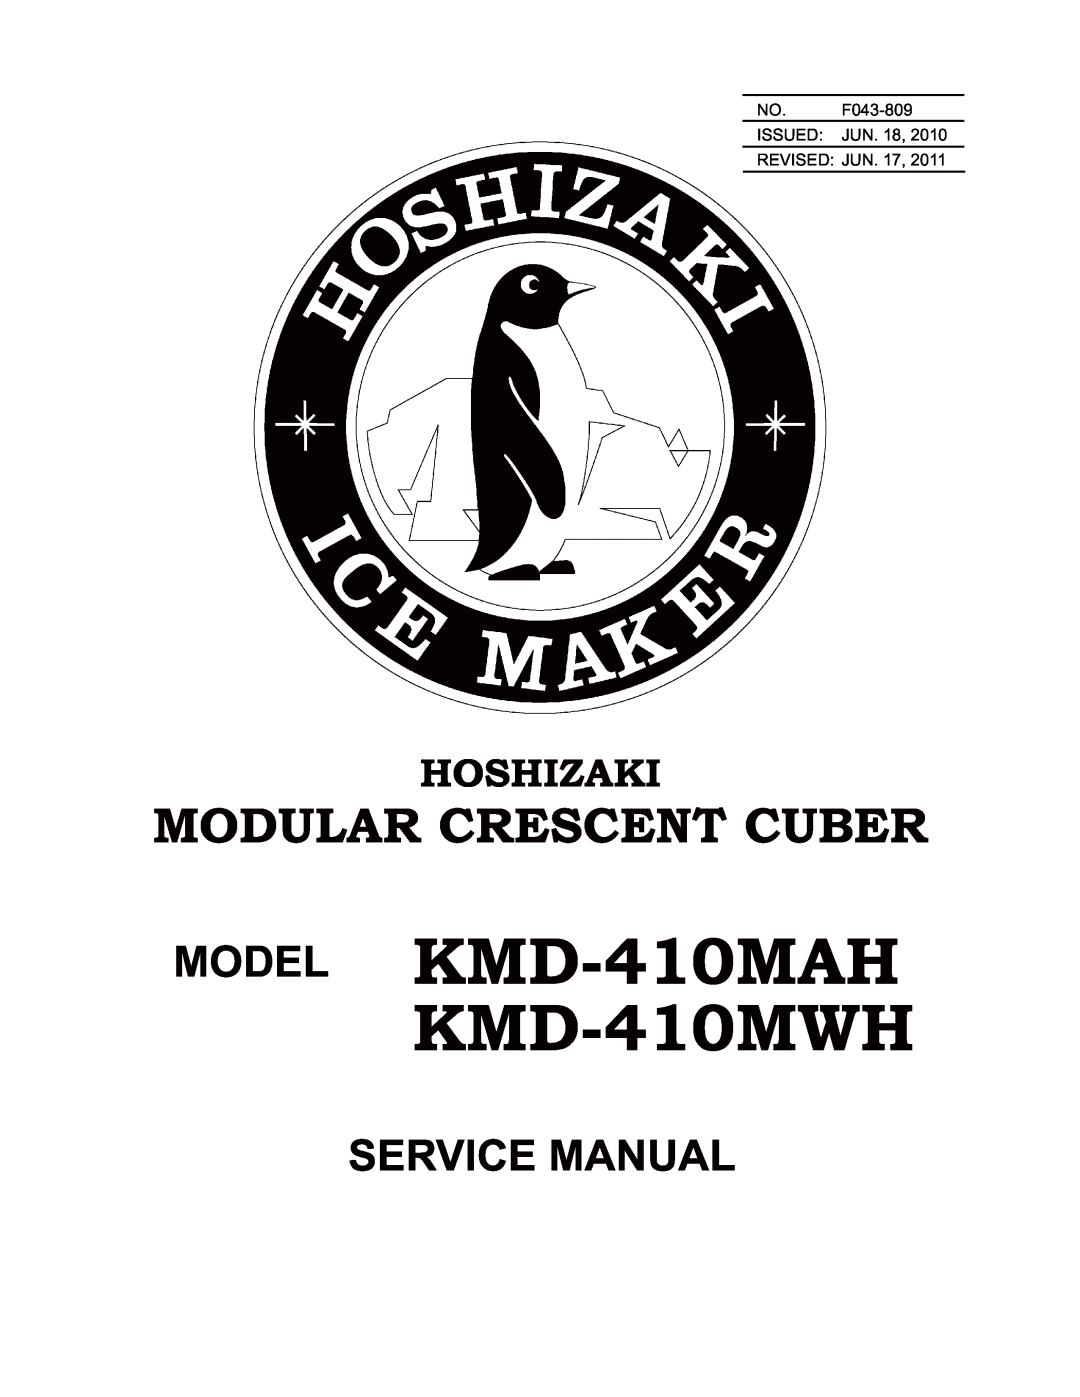 Hoshizaki instruction manual Modular Crescent Cuber Models KMD-410MAH KMD-410MWH, Issued 